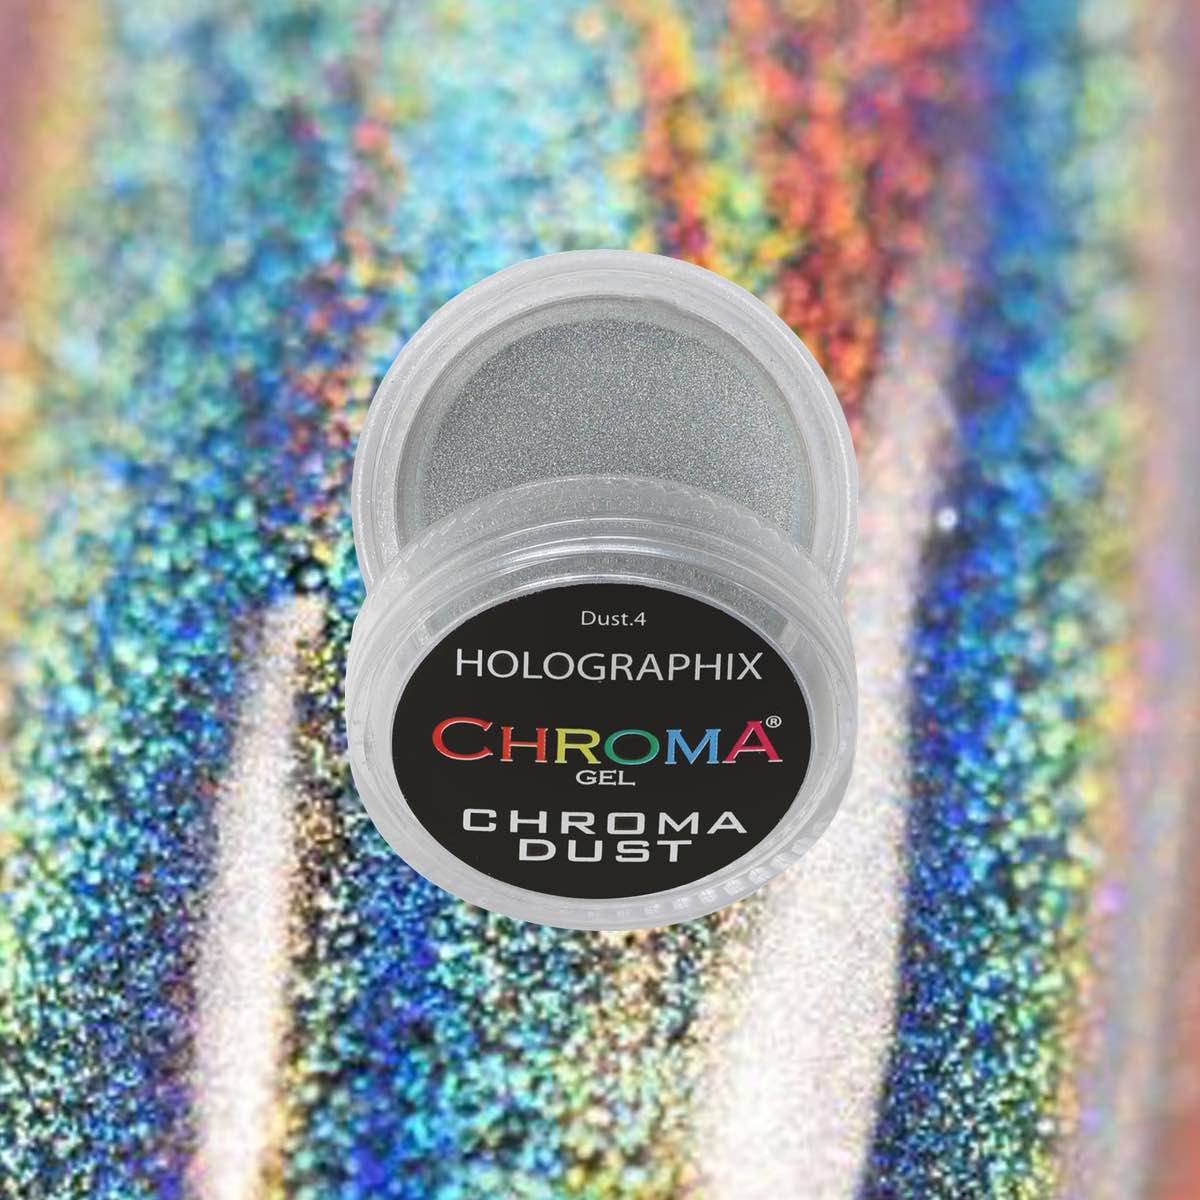 Chroma Dust No.4 Holographix Chrome Powder - Mirror Nails 1g - Beauty Hair Products Ltd